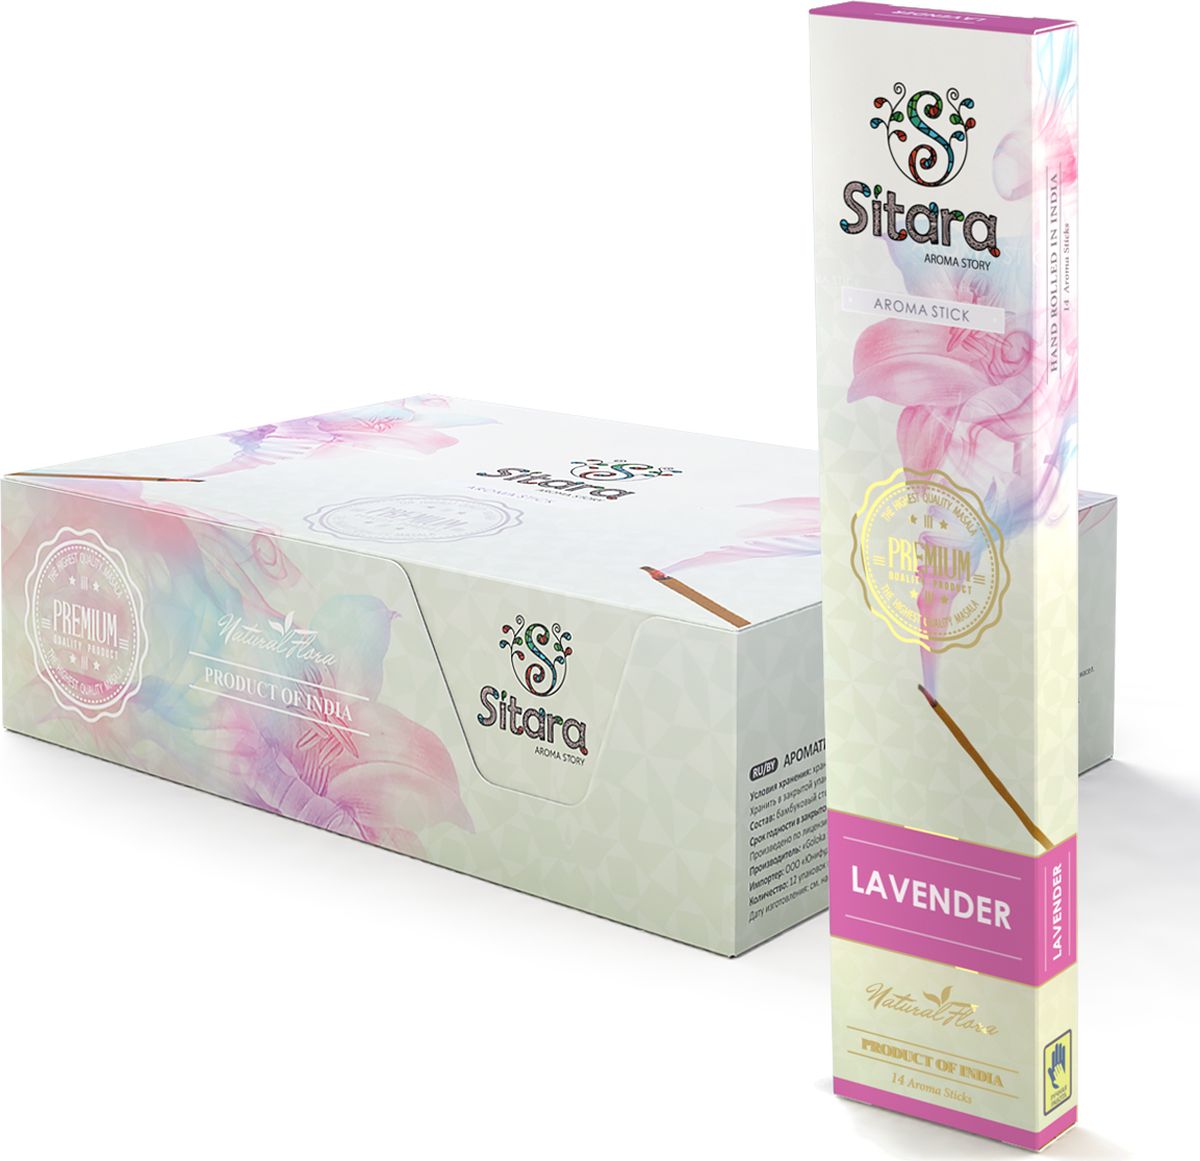 Ароматические палочки Sitara Premium 